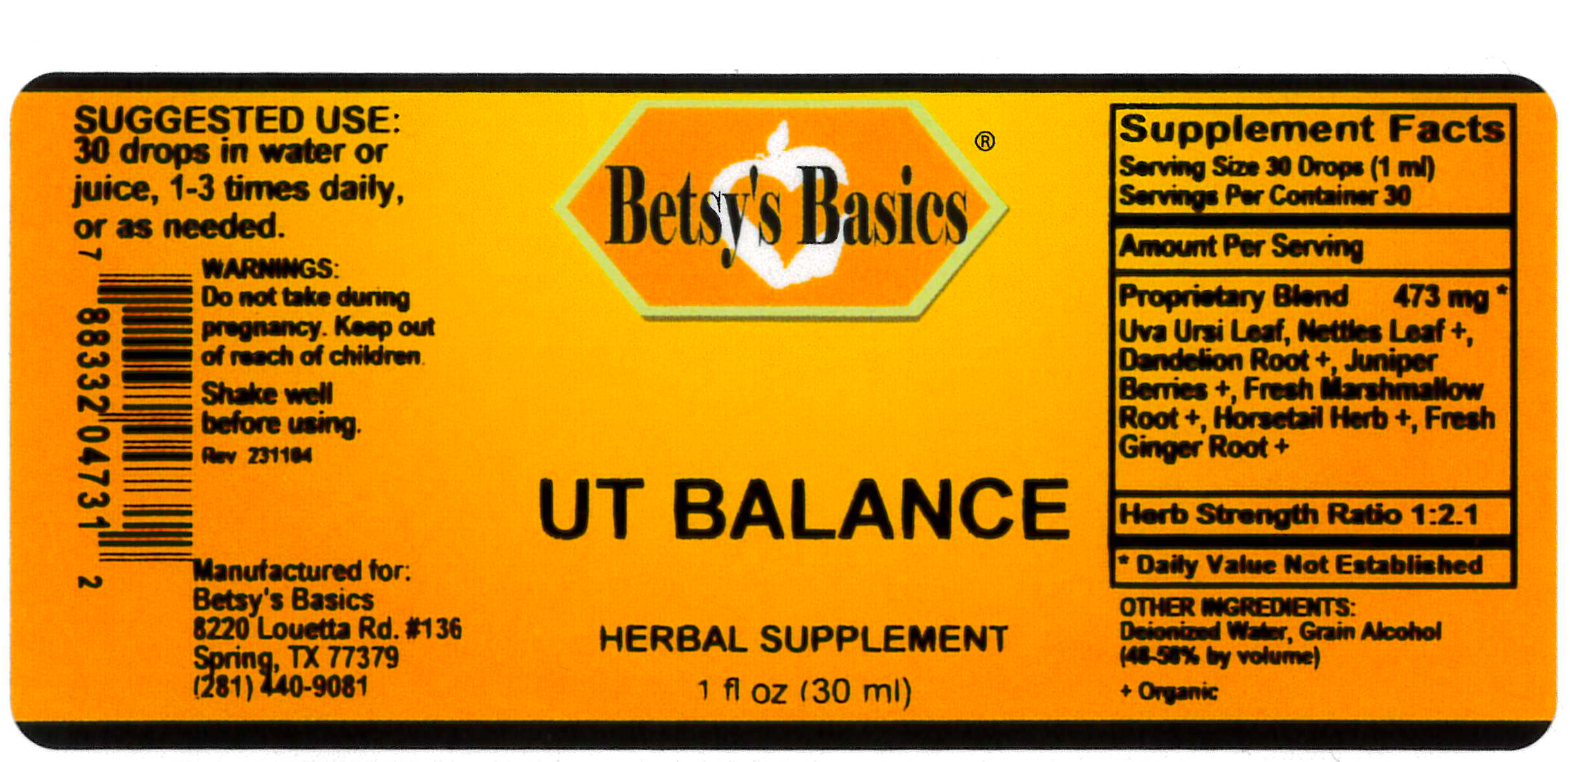 Betsy_s Basics UT Balance